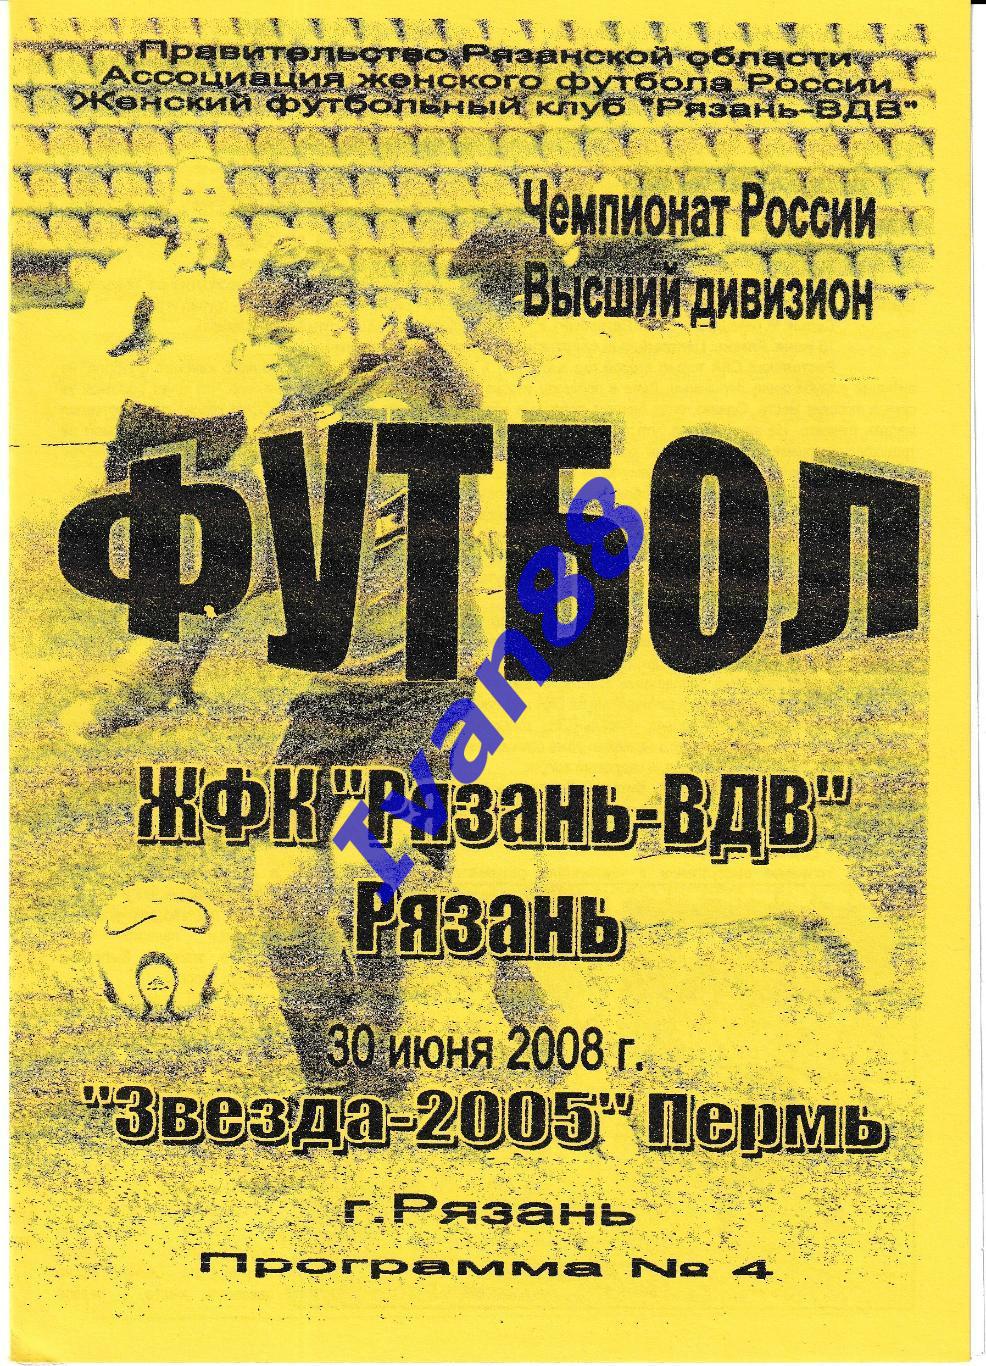 Рязань-ВДВ Рязань - Звезда-2005 Пермь 2008